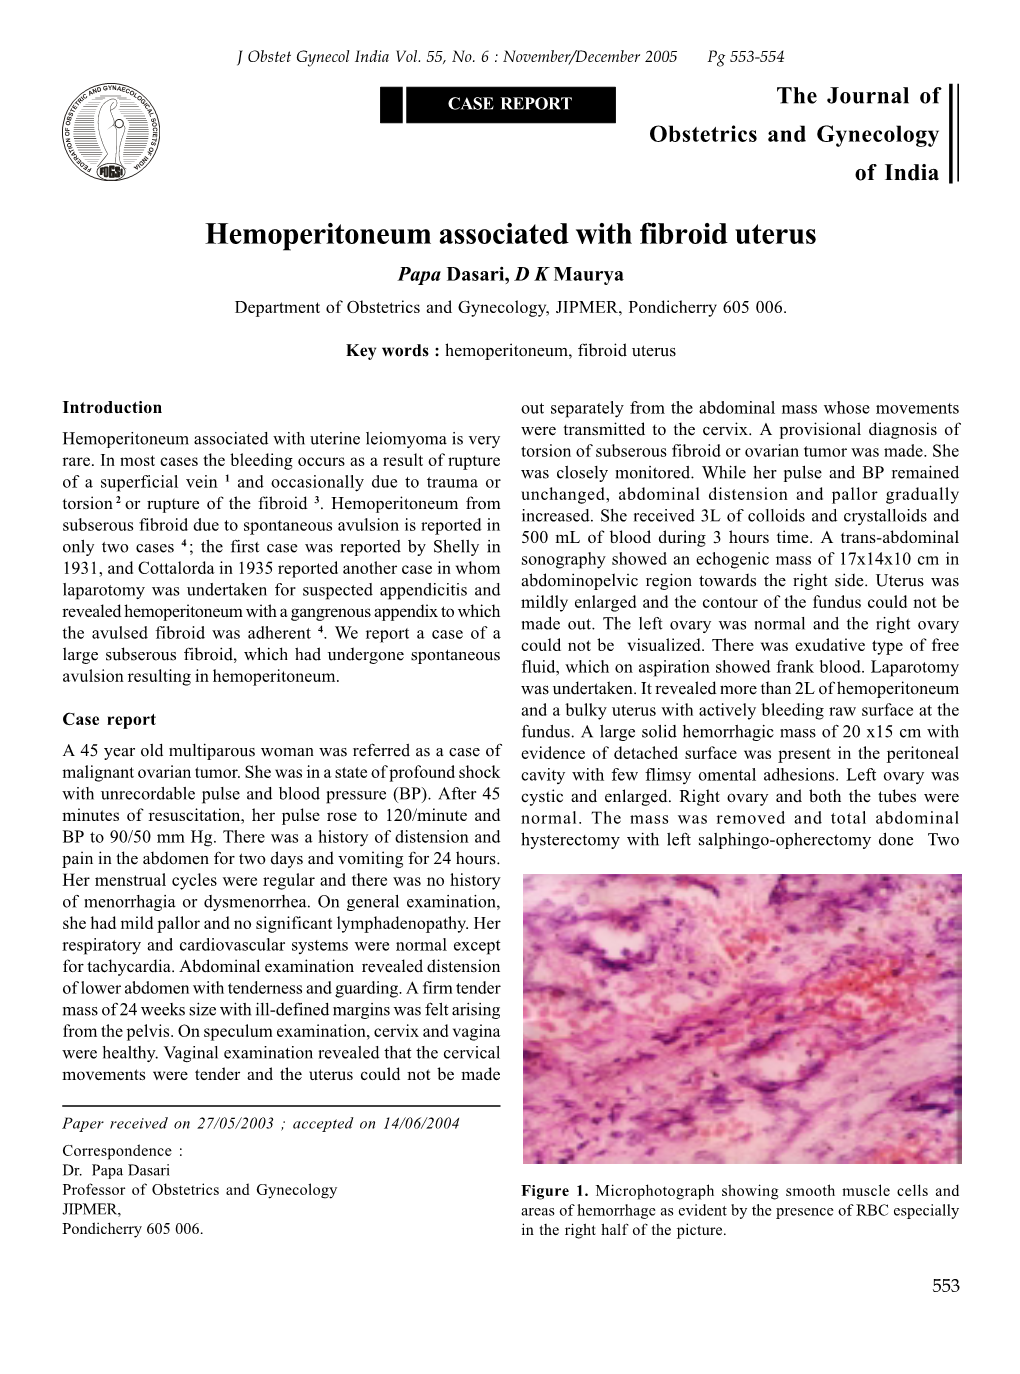 Hemoperitoneum Associated with Fibroid Uterus Papa Dasari, D K Maurya Department of Obstetrics and Gynecology, JIPMER, Pondicherry 605 006